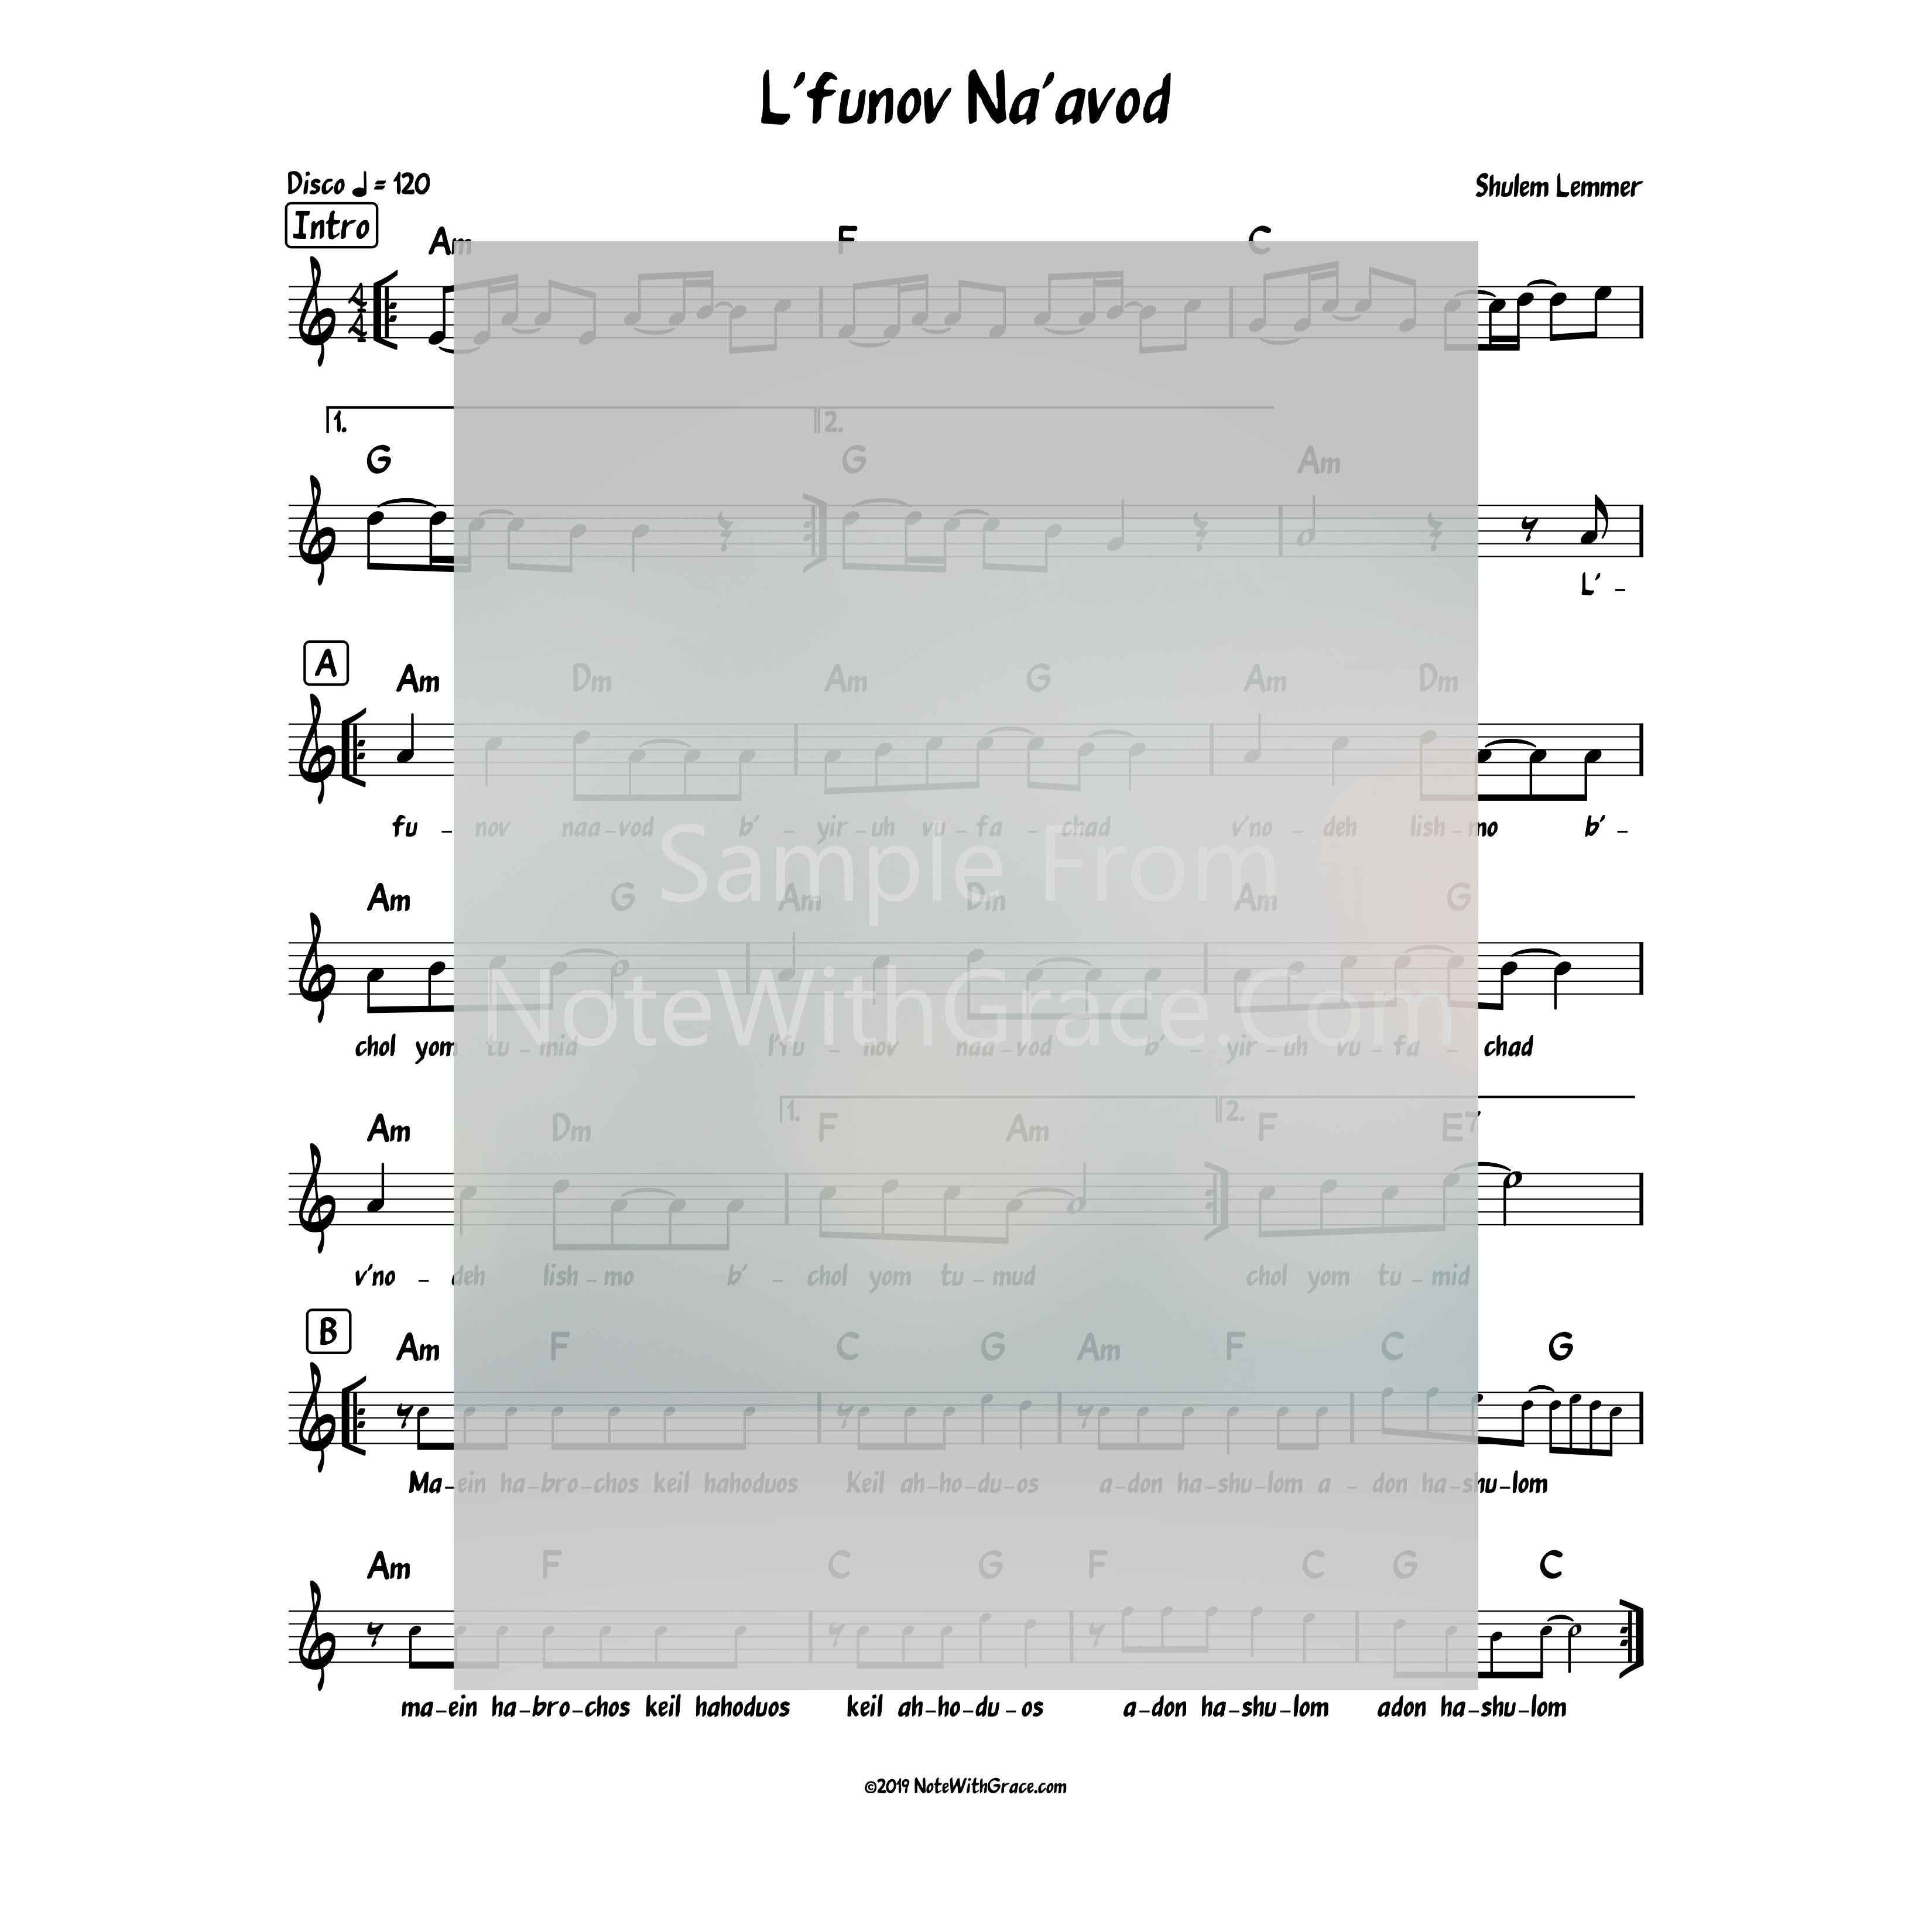 L'funov Lead Sheet (Shulem Lemmer) Album: Shulem-Sheet music-NoteWithGrace.com